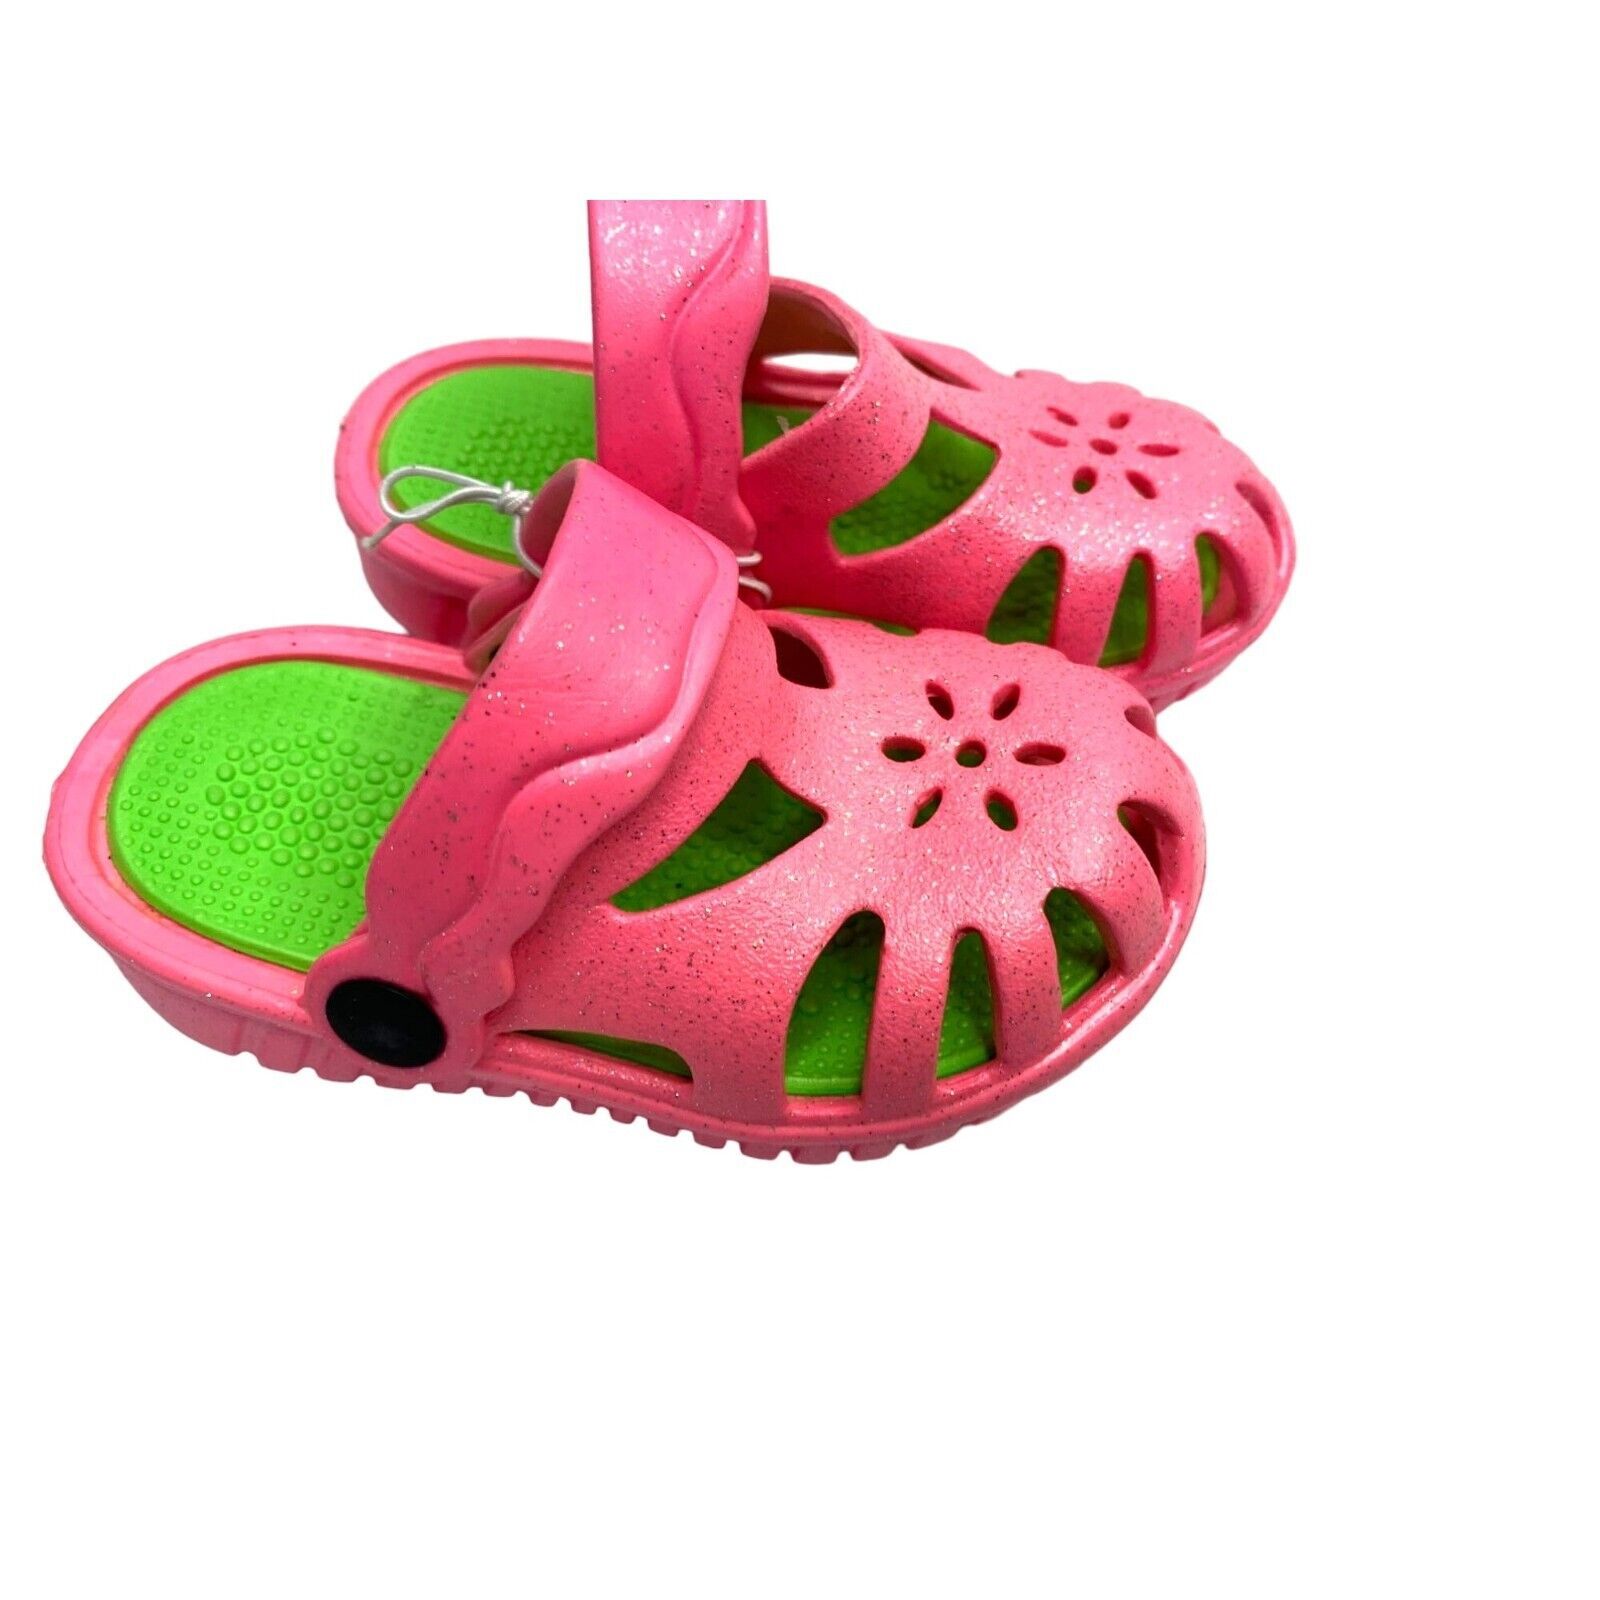 Primary image for Berytos Girls Toddler Size 5 6 Pink Sparkle Clogs Slip On Shoes FIG-1577TZ